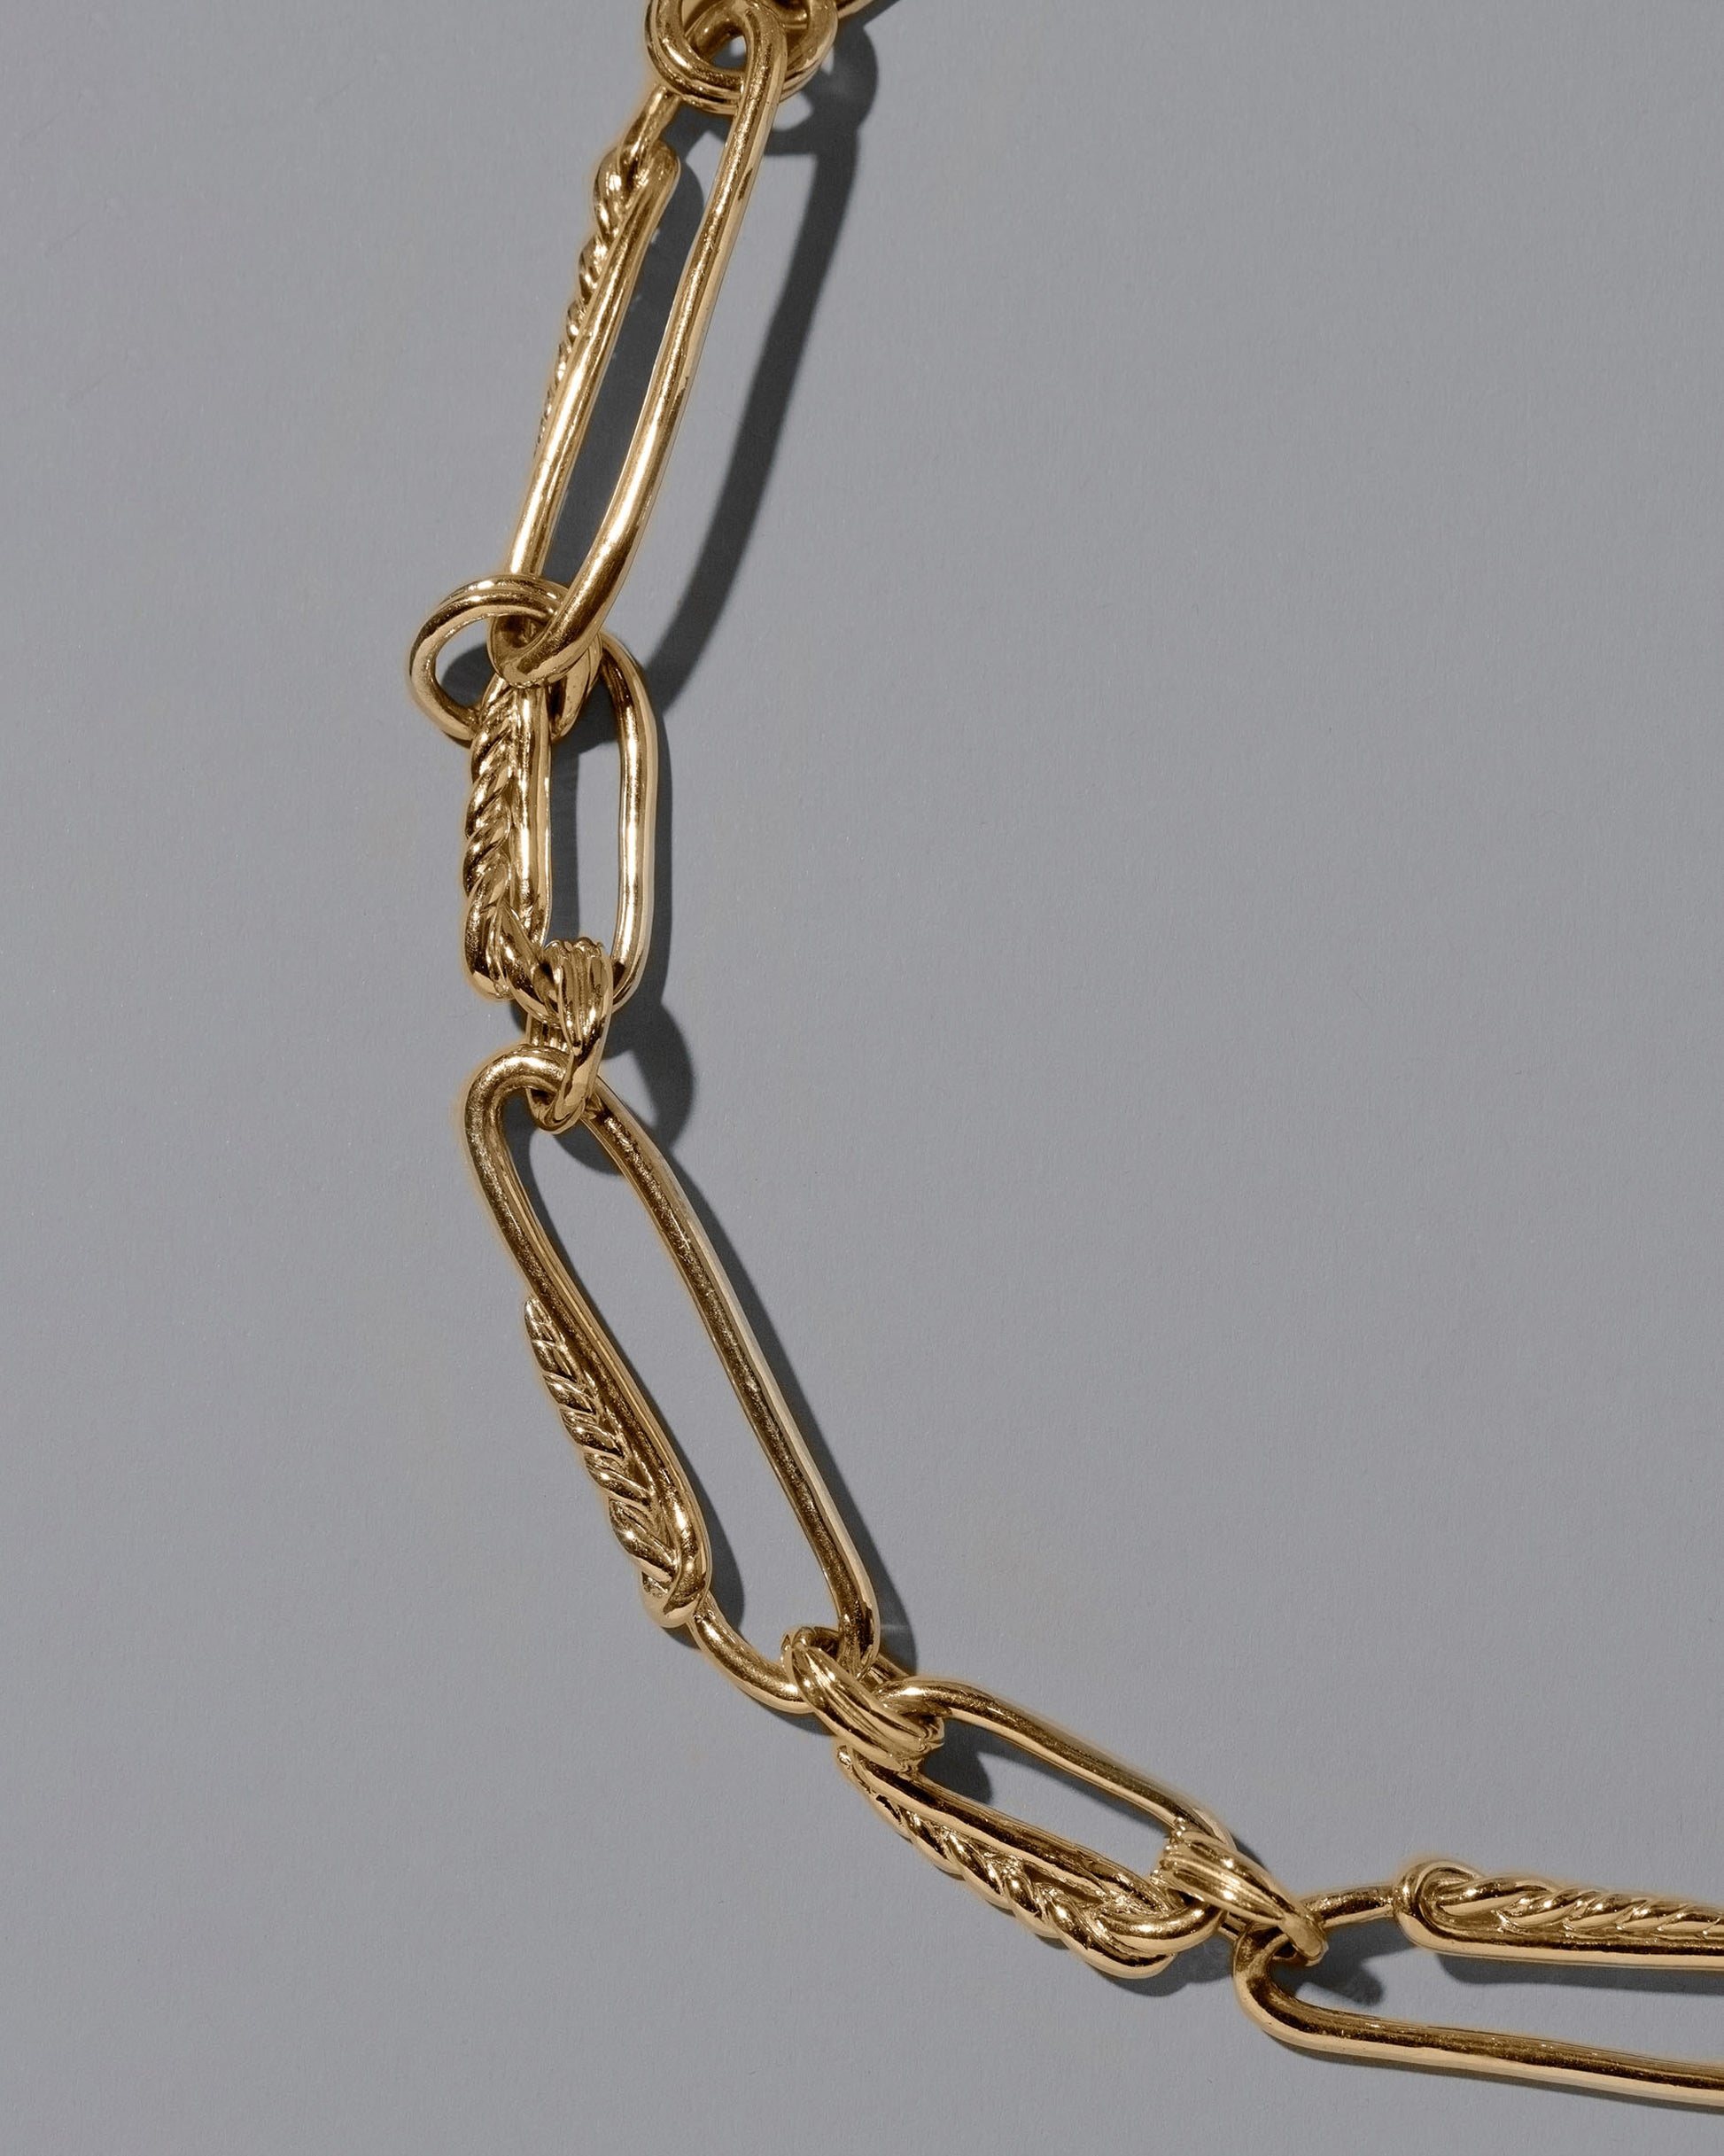 Closeup details of the CRZM 22k Gold Ophiolite Necklace on light color background.